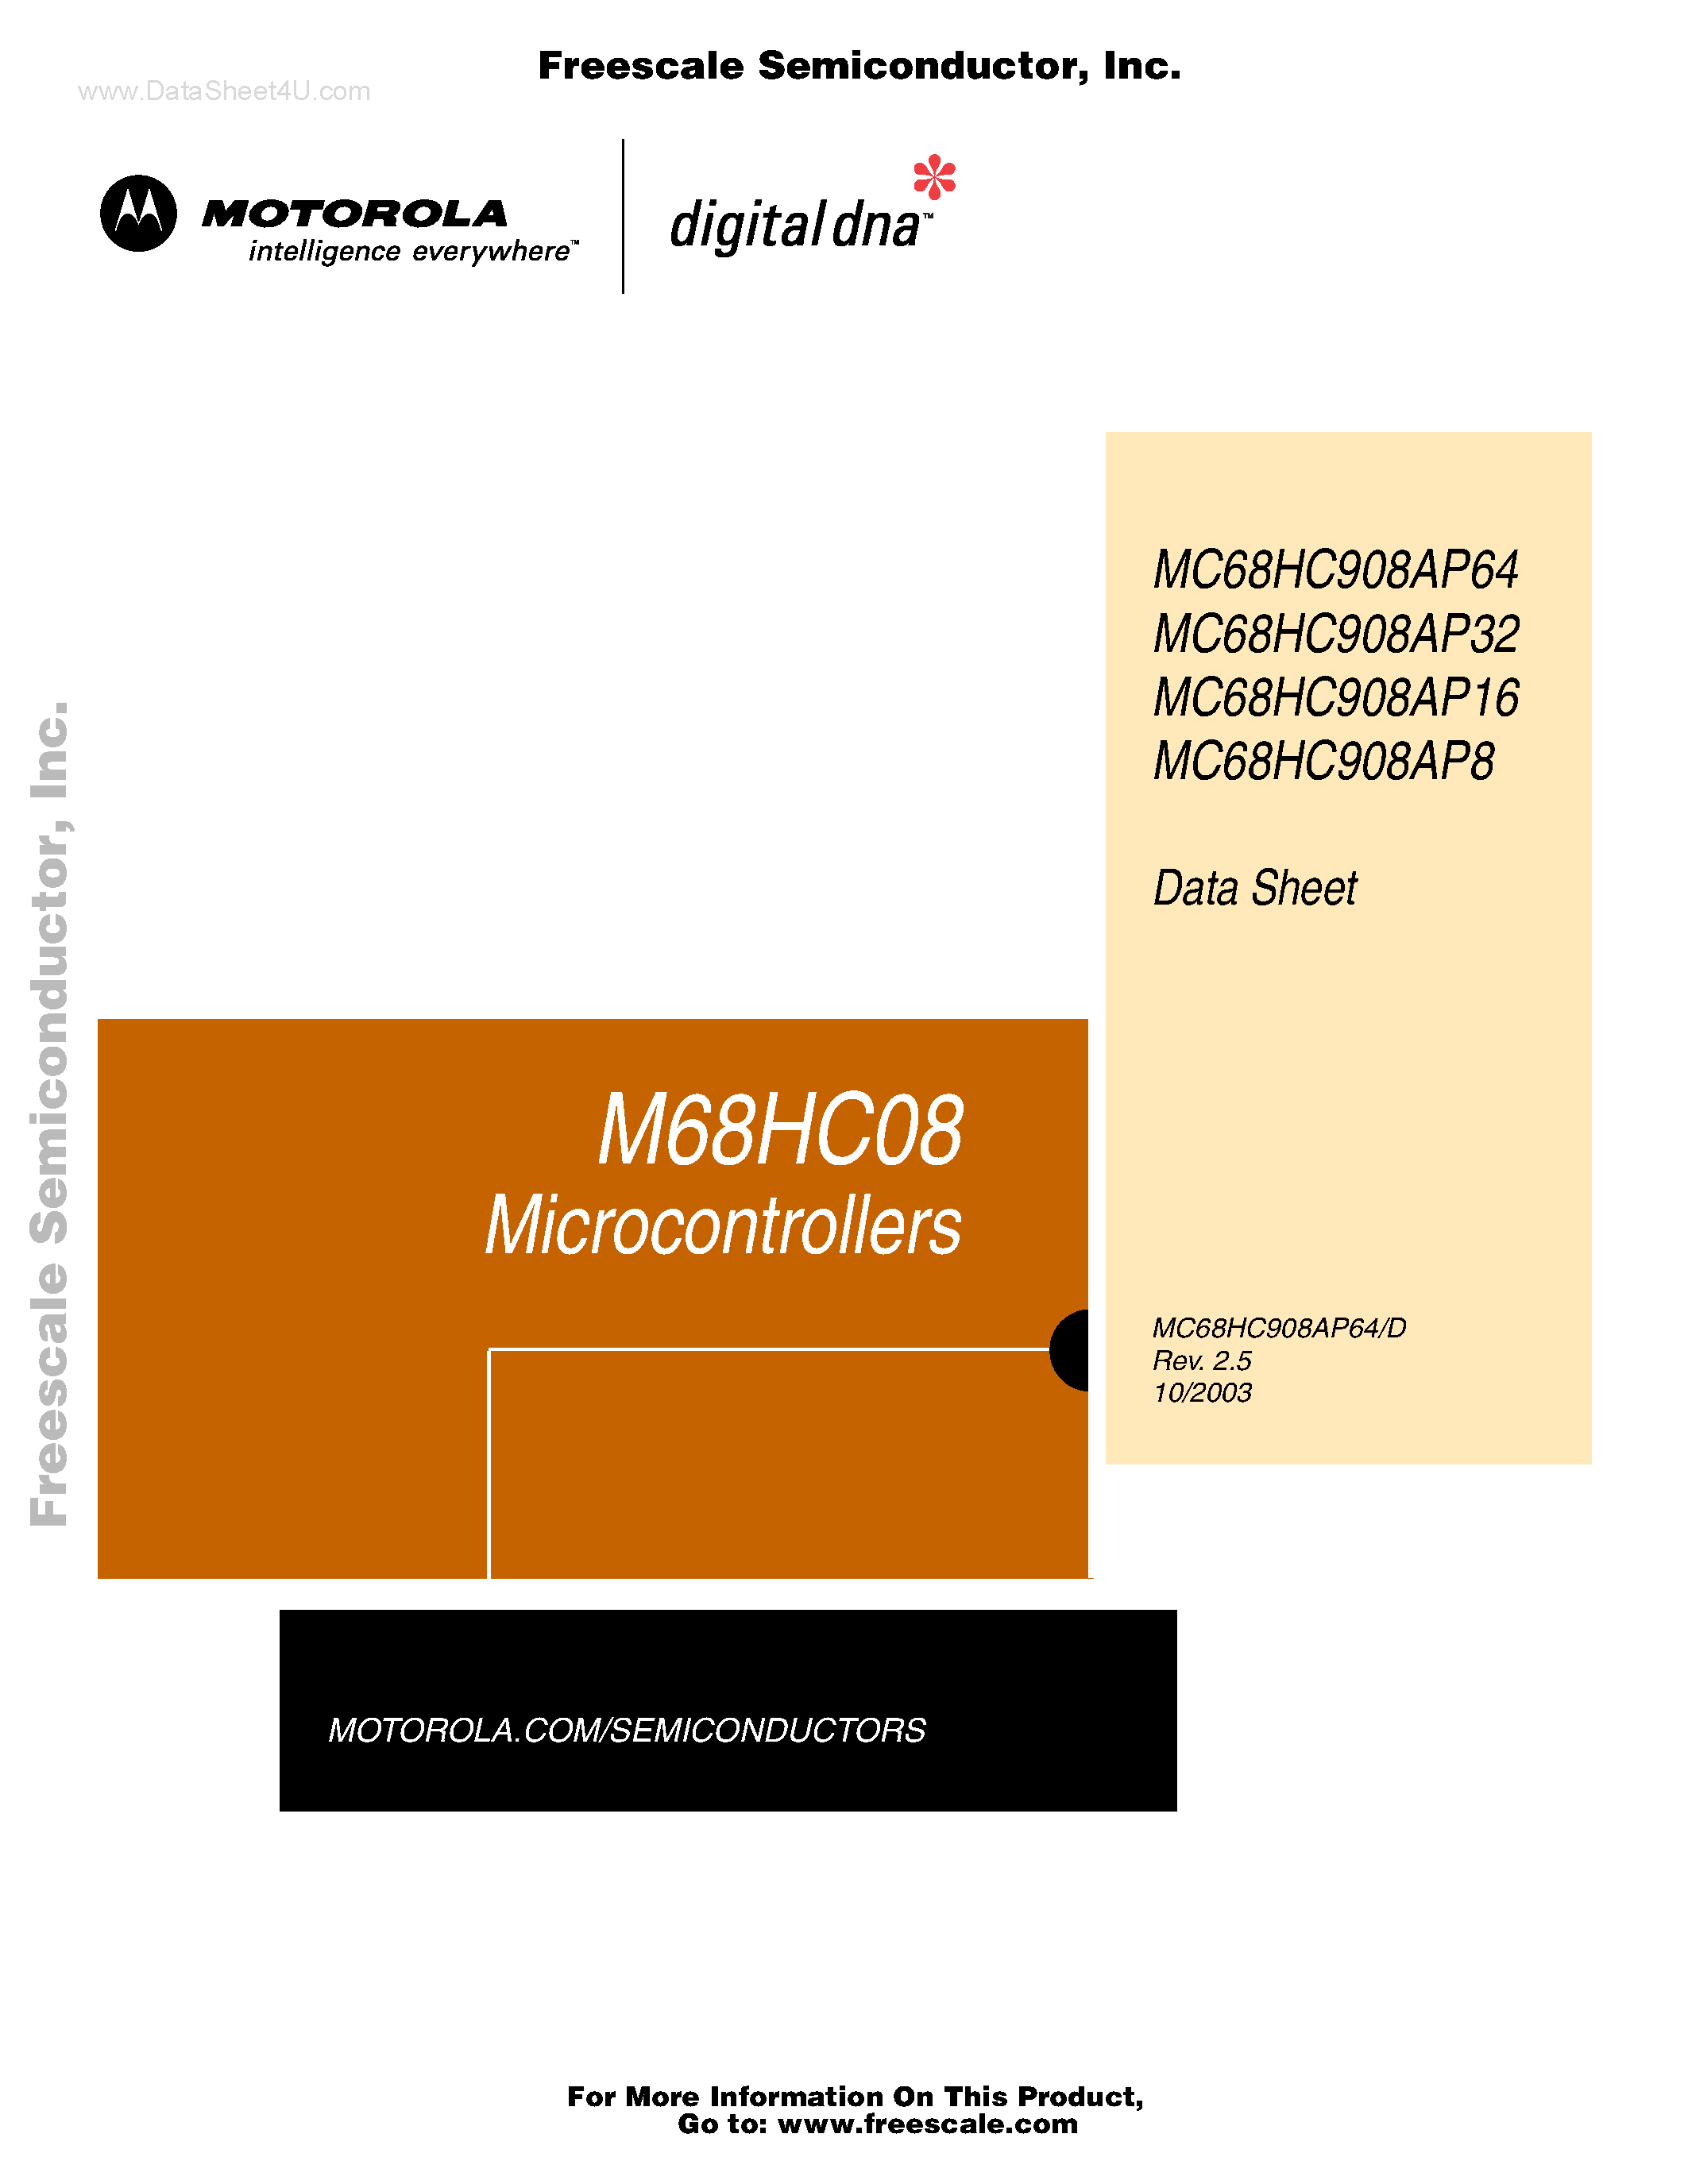 Datasheet MC68HC908AP16 - (MC68HC908AP8 - MC68HC908AP64) Microcontrollers page 1